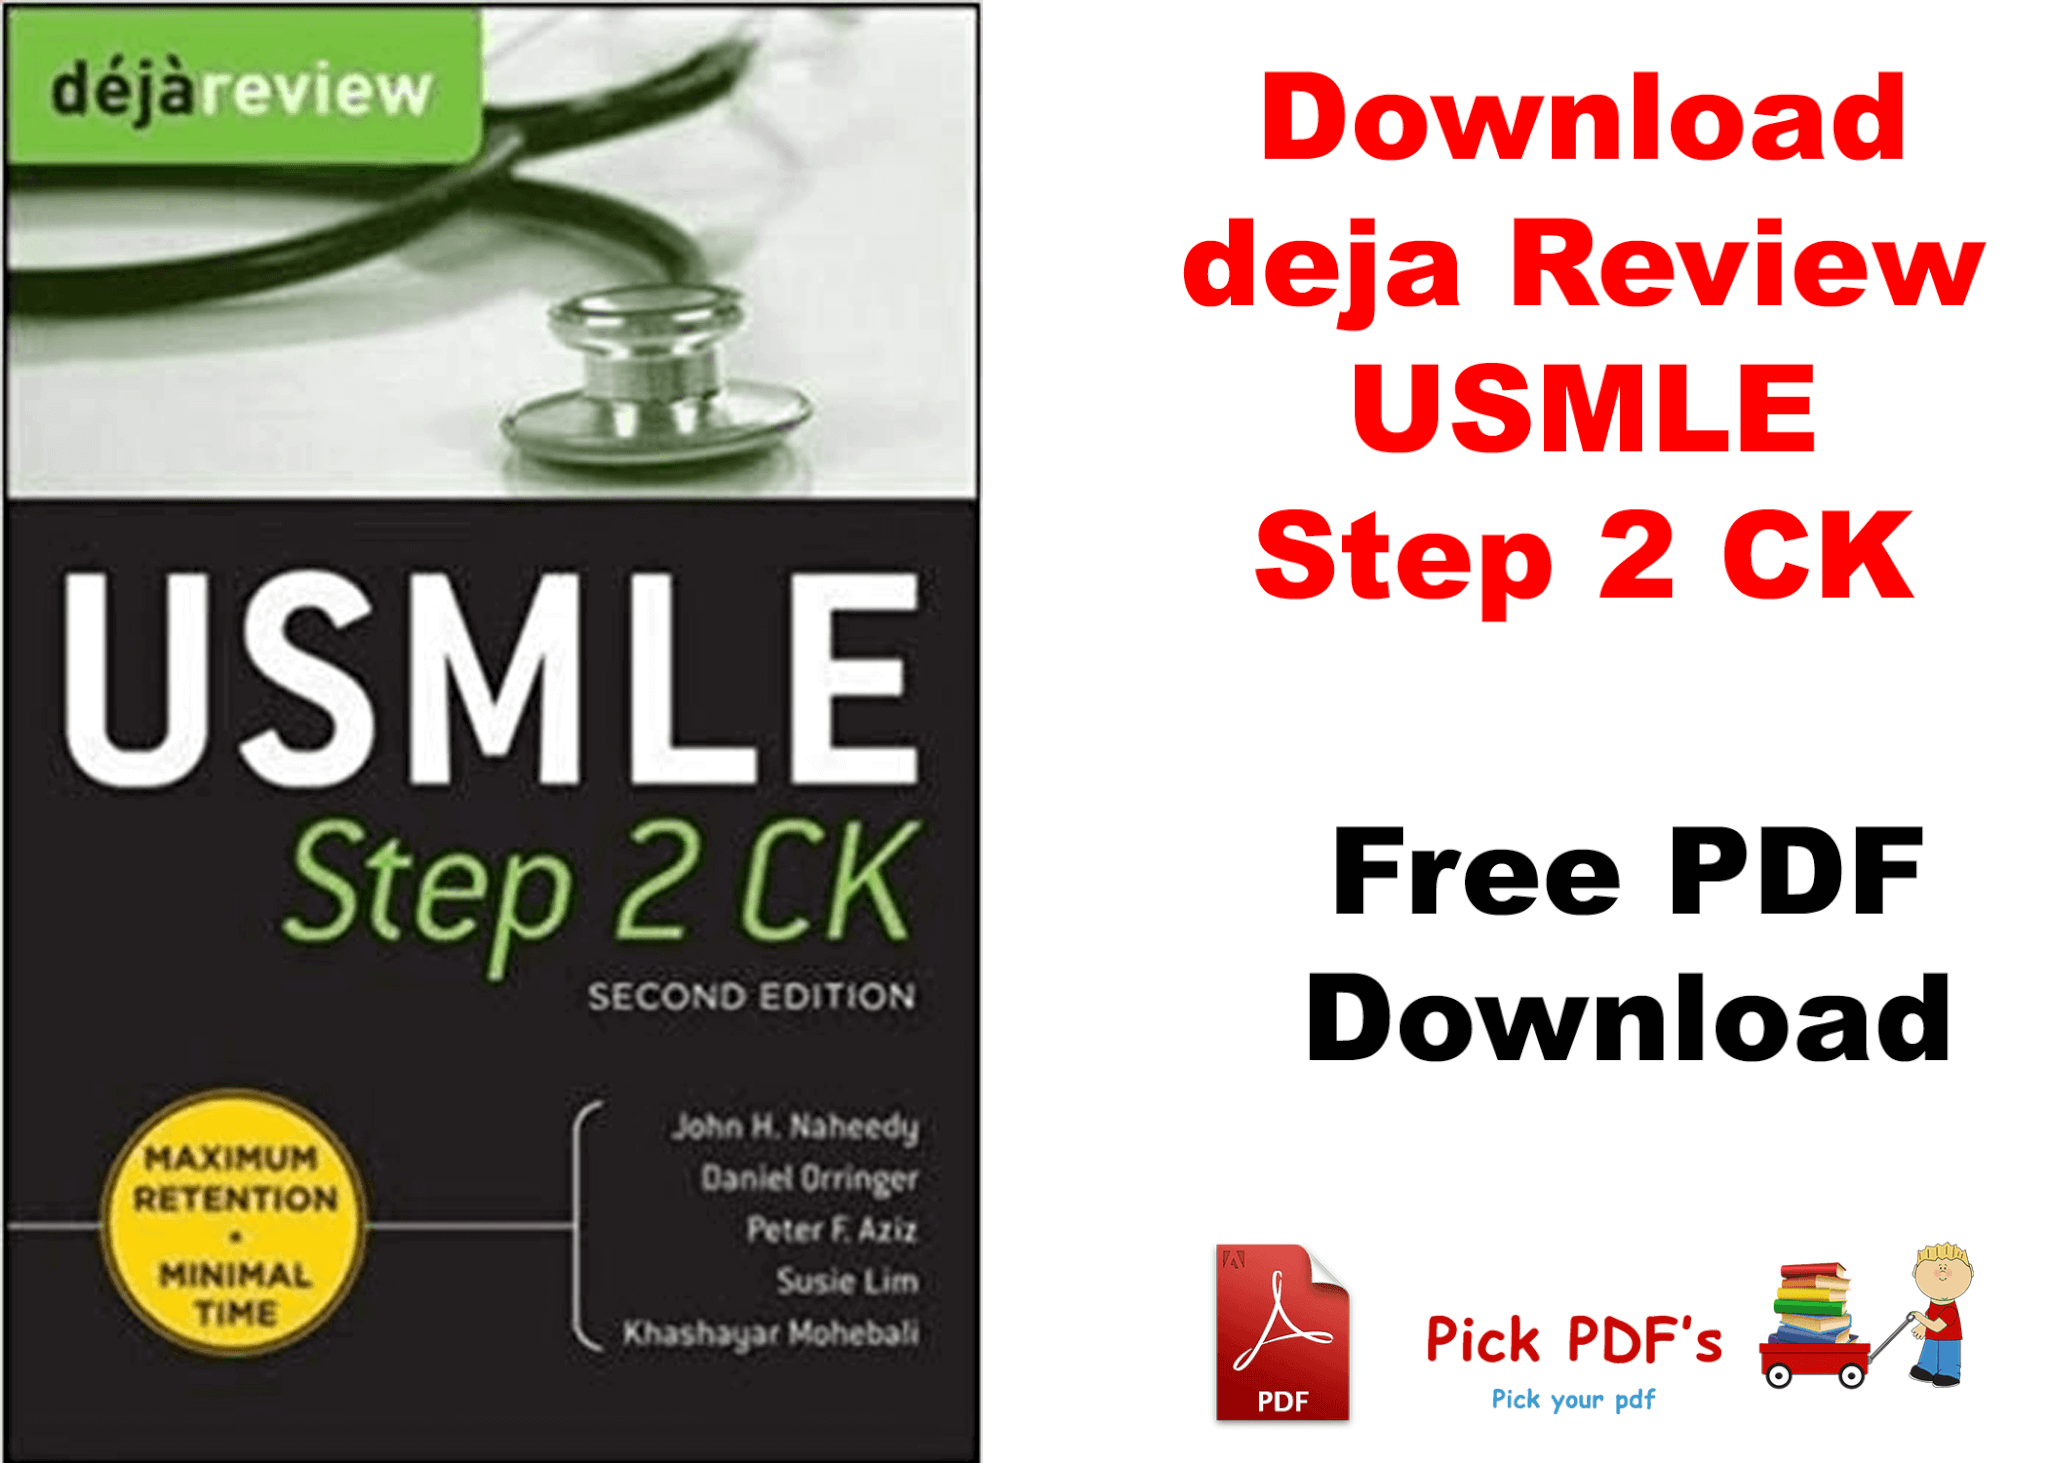 https://pickpdfs.com/deja-review-usmle-step-2-ck-second-edition-pdf-free-download/